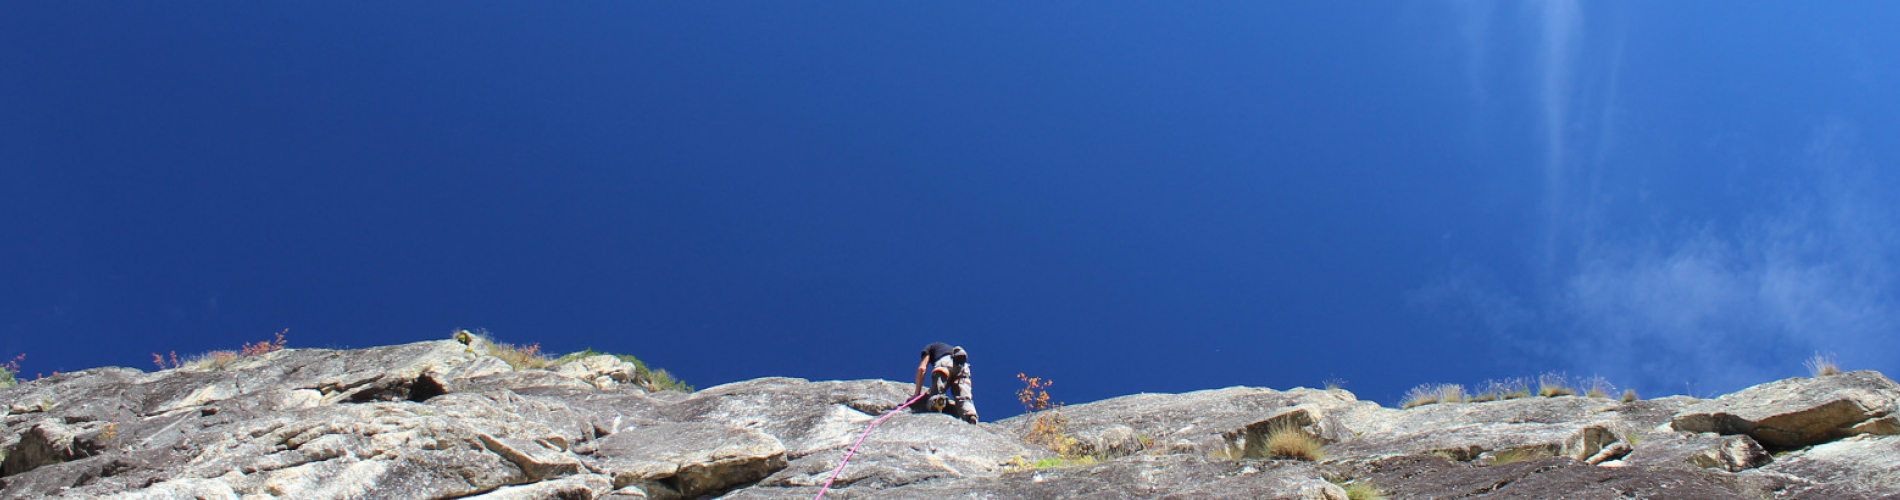 Dolomiti Guides climbing